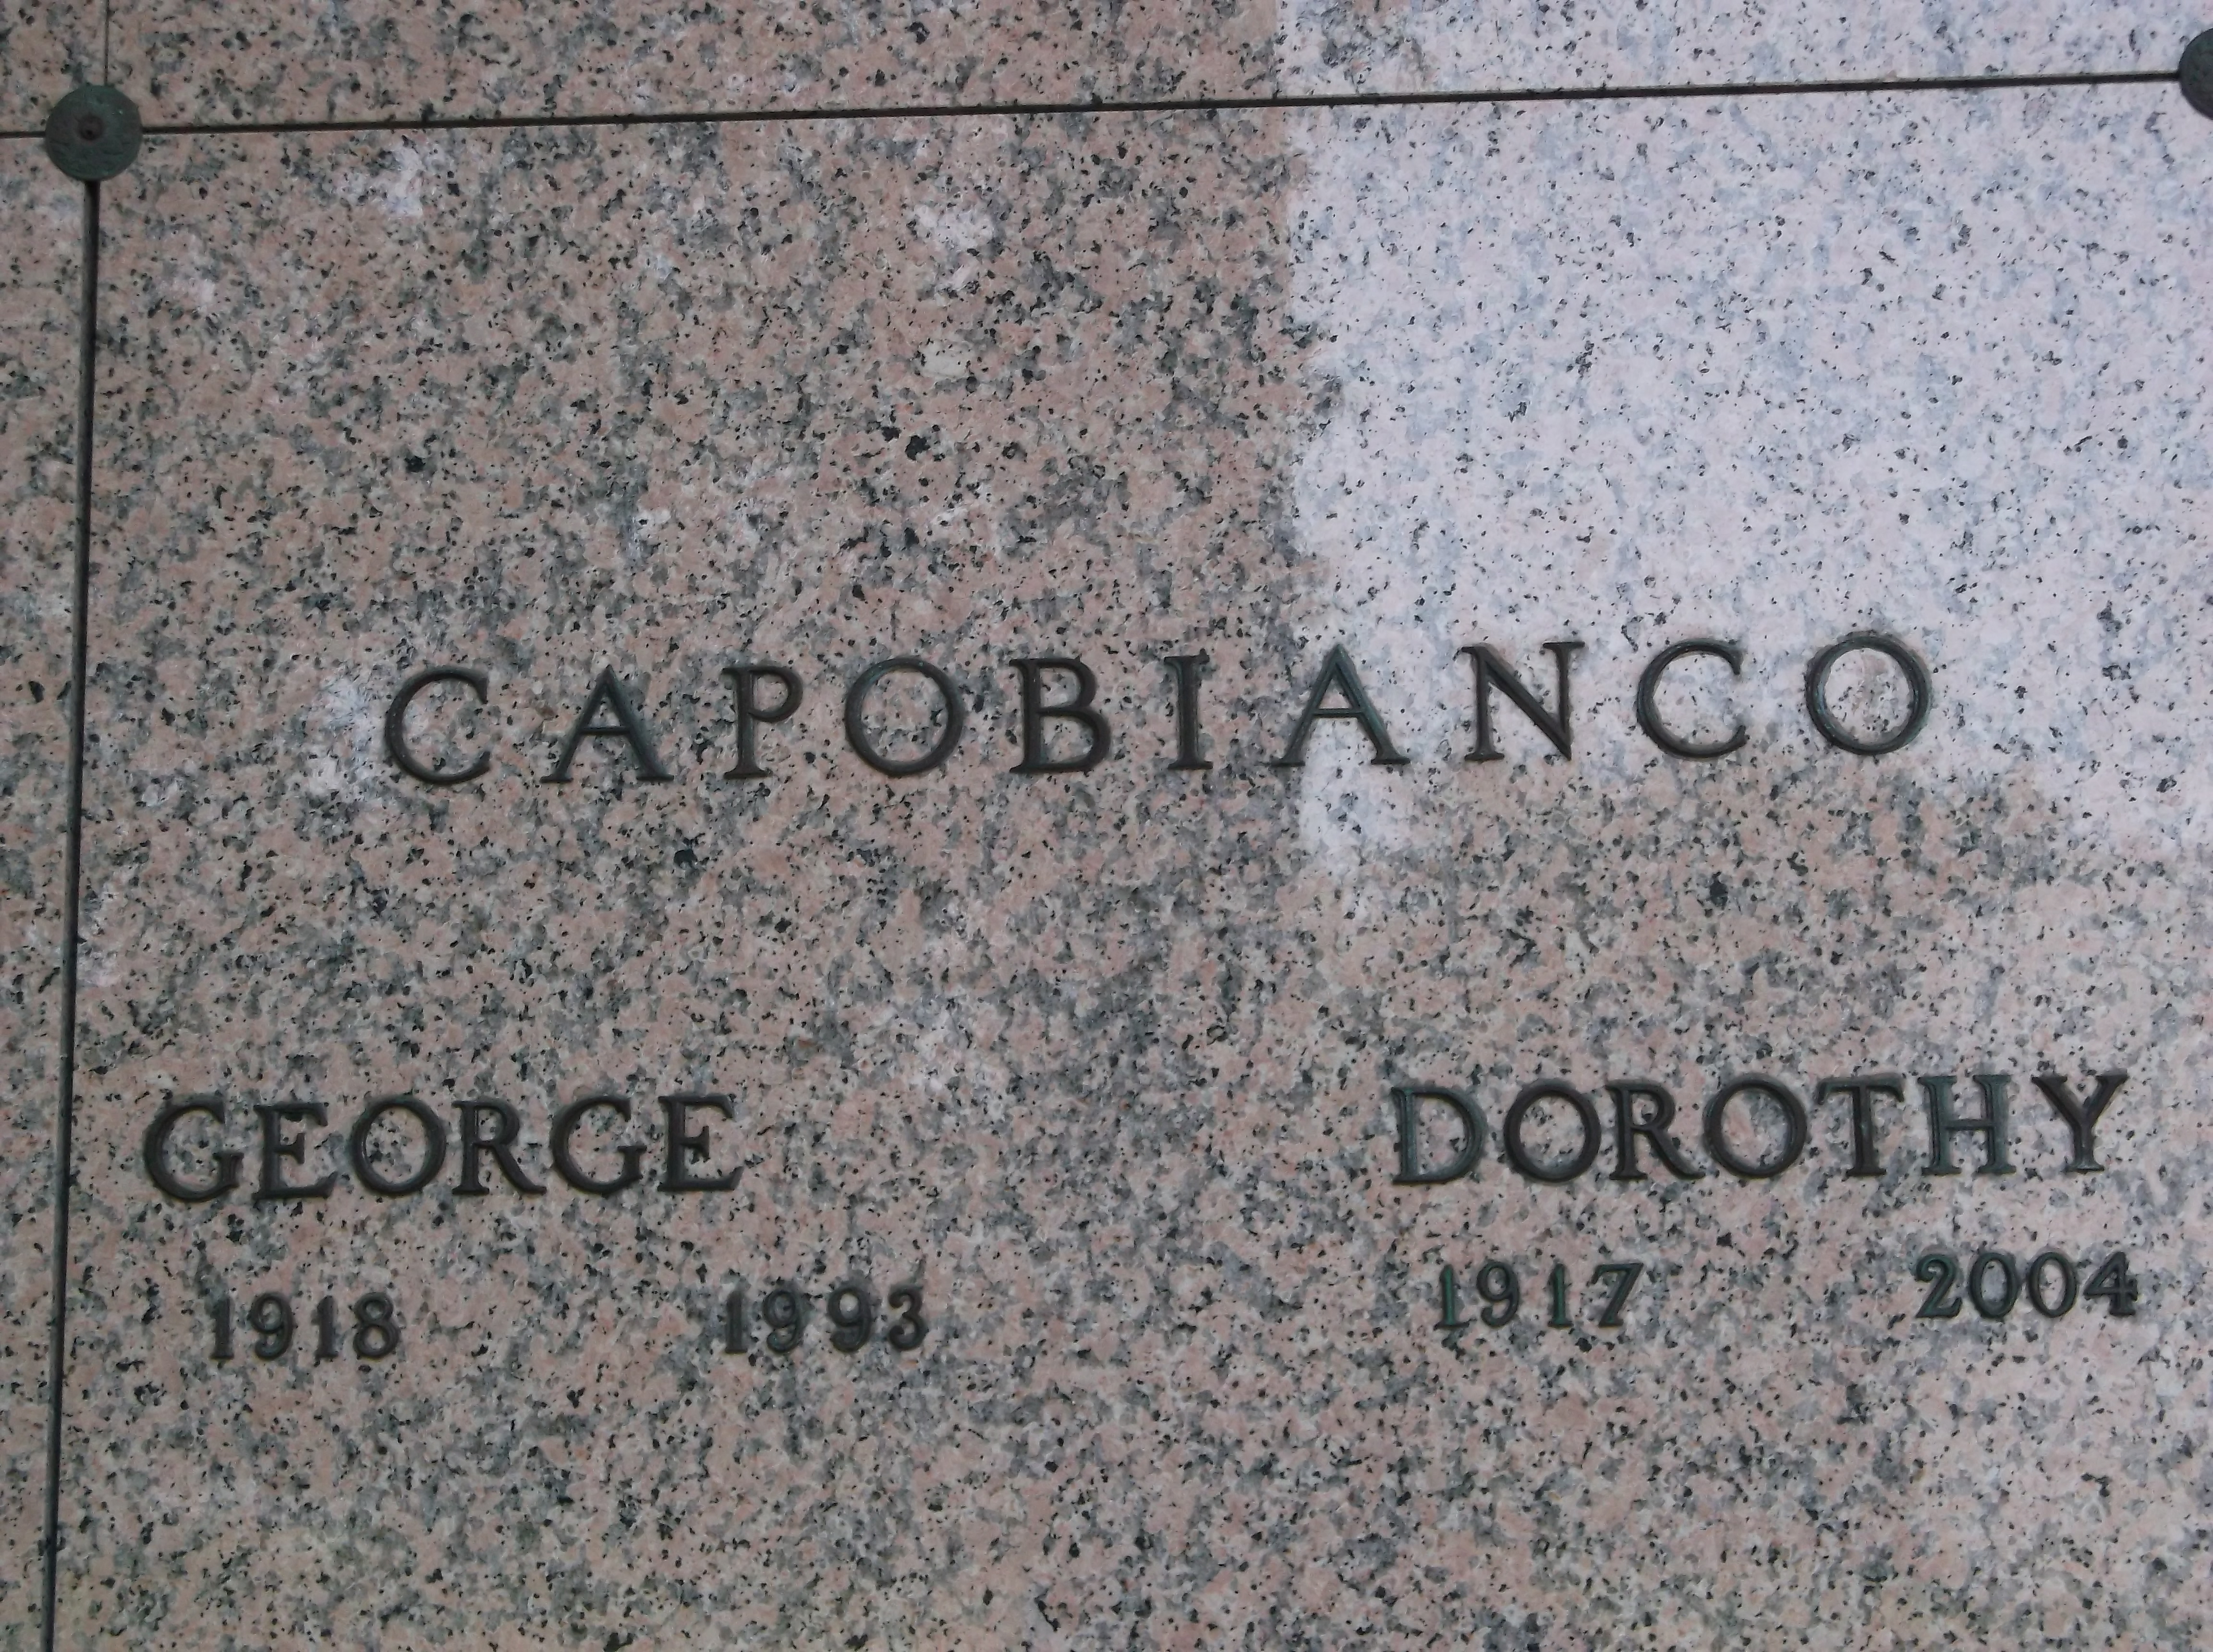 George Capobianco